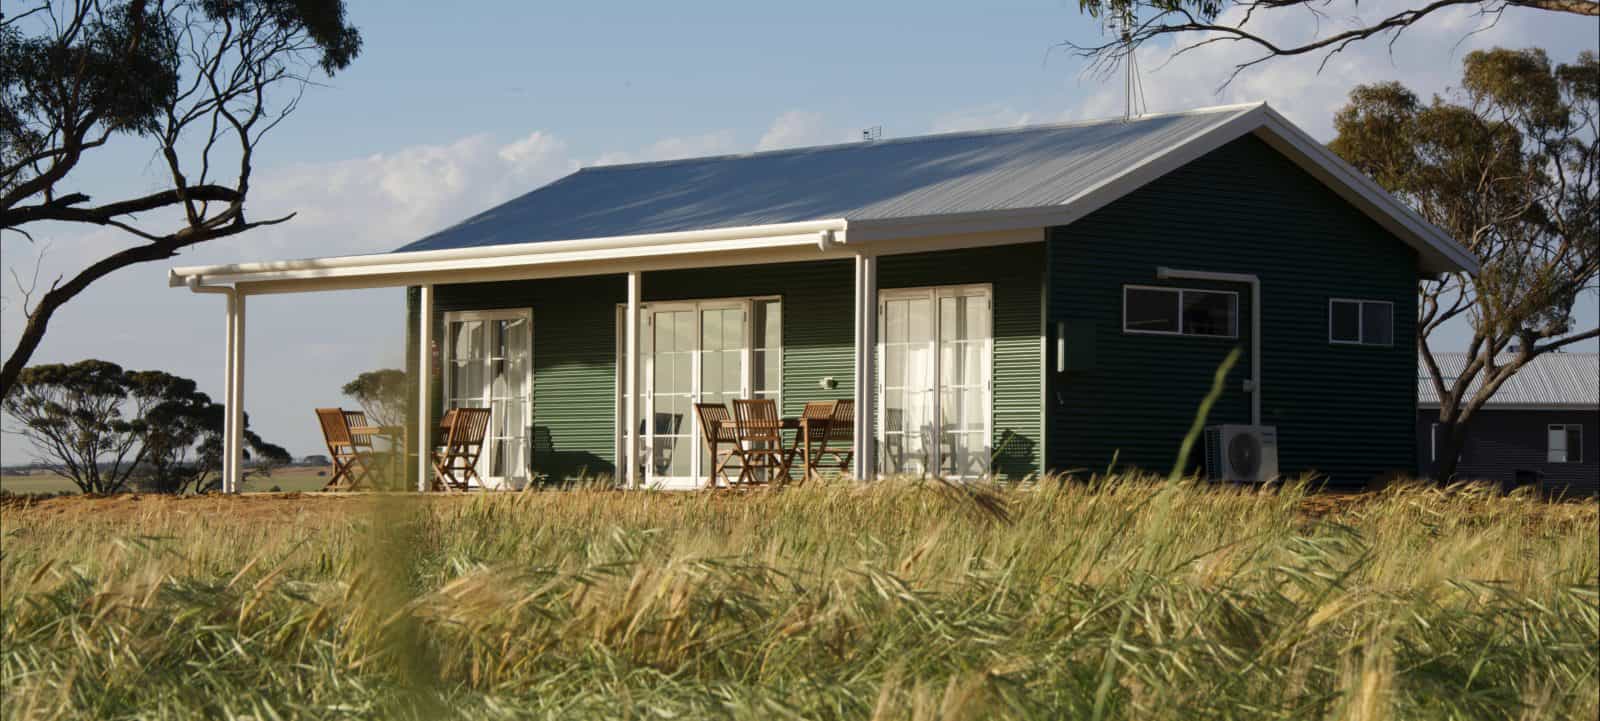 Mary's Farm Cottages, Kukerin, Western Australia